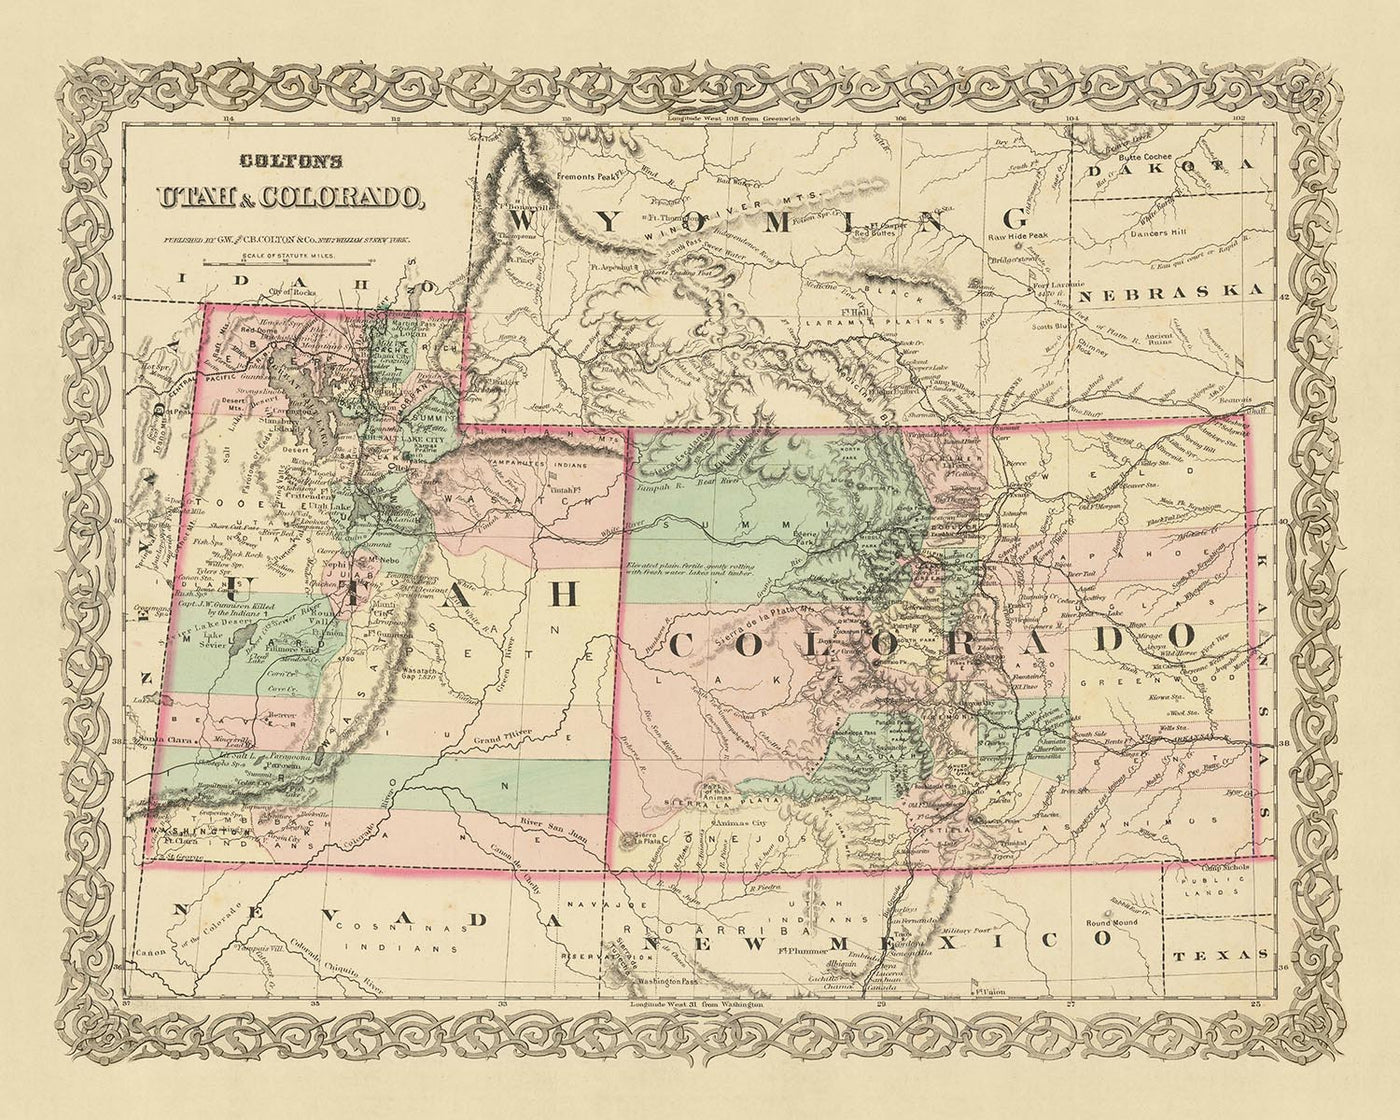 Old map of Utah & Colorado by J. H. Colton, 1873: Salt Lake City, Denver, Provo, Colorado Springs, Fort Collins